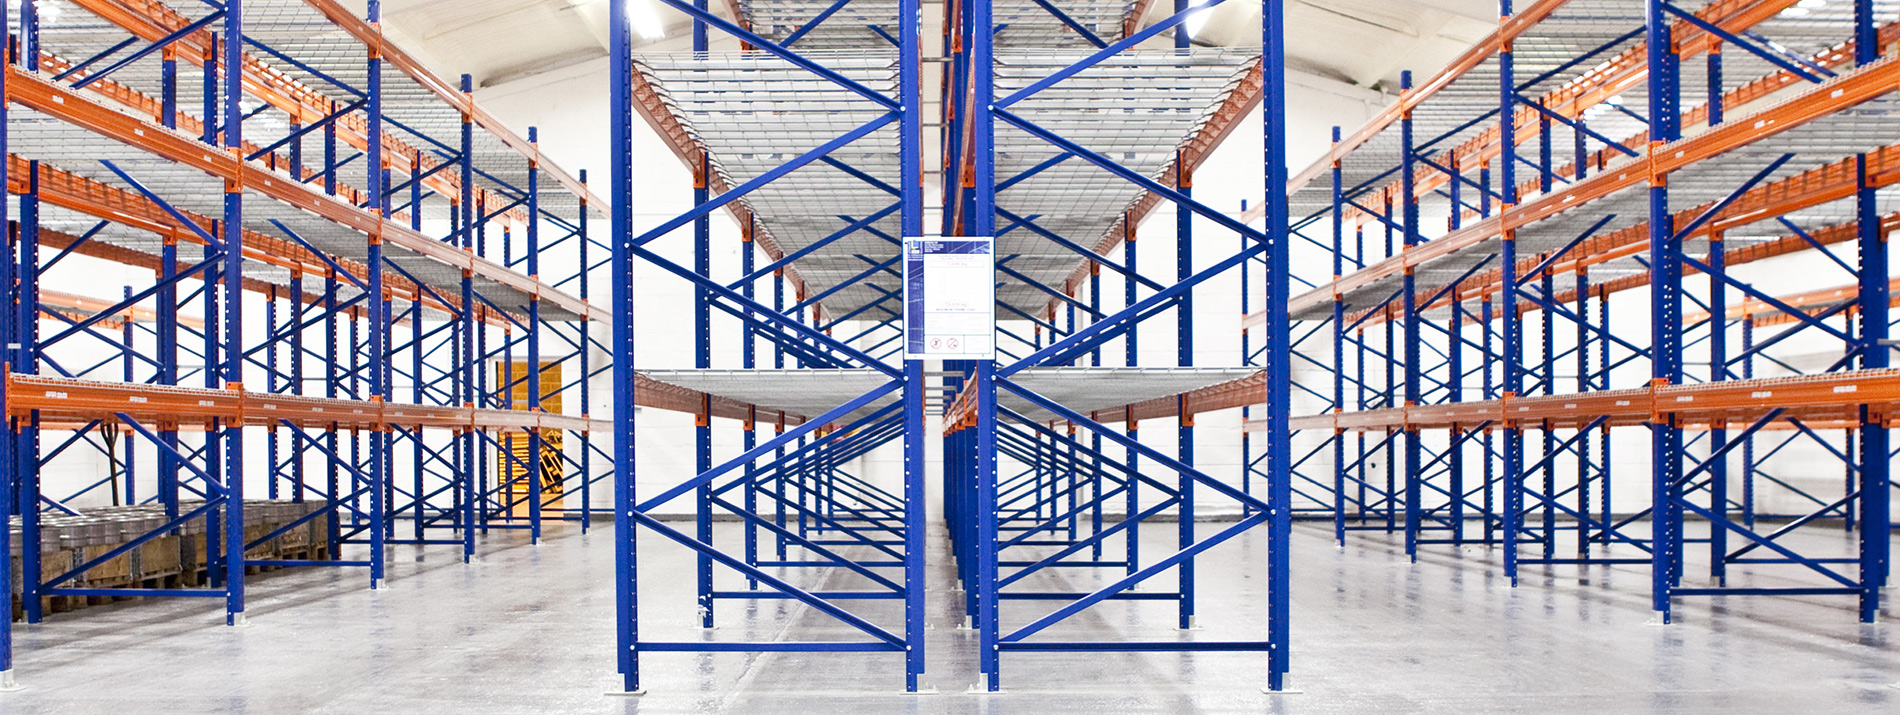 services-warehouse-label-install-racks-orange-warehouse-brand-new-dls